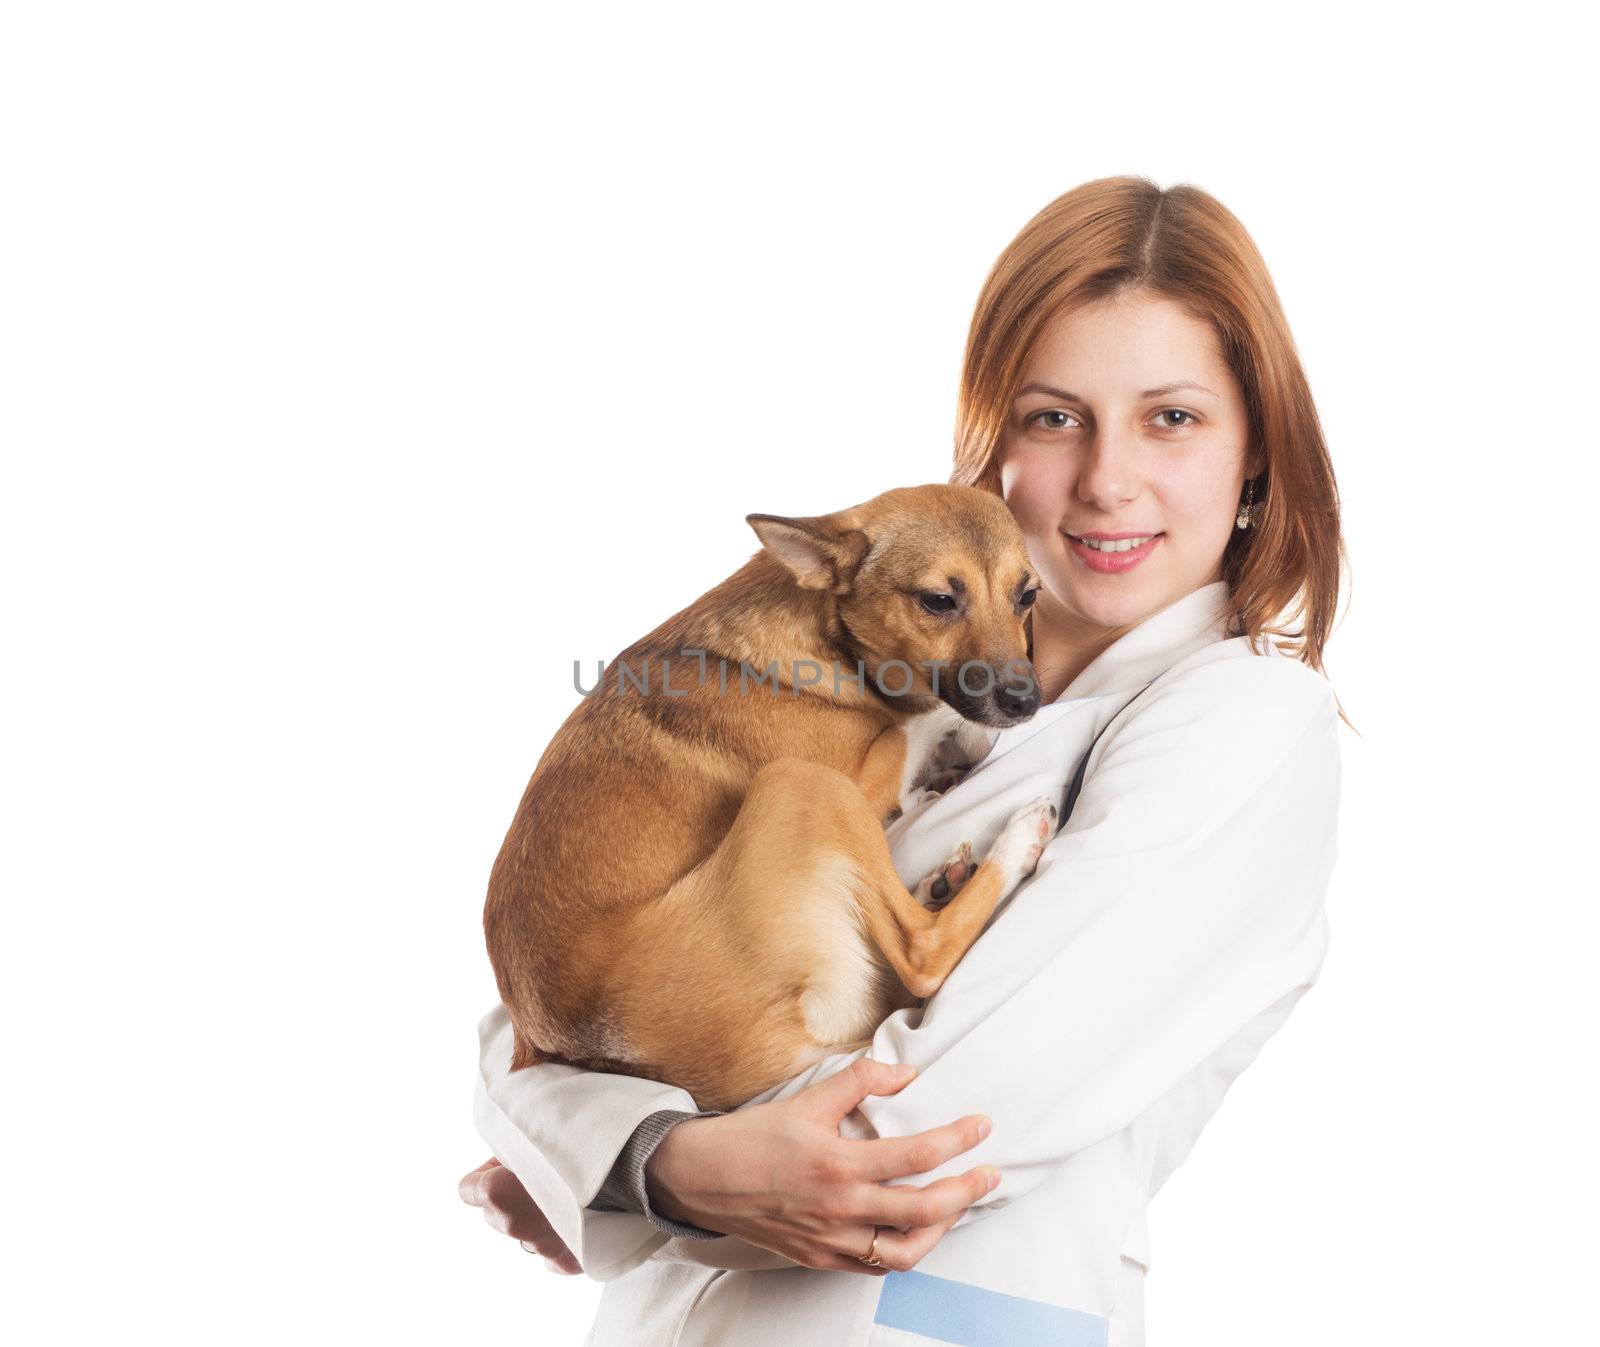 the vet female with a dog  by gurin_oleksandr